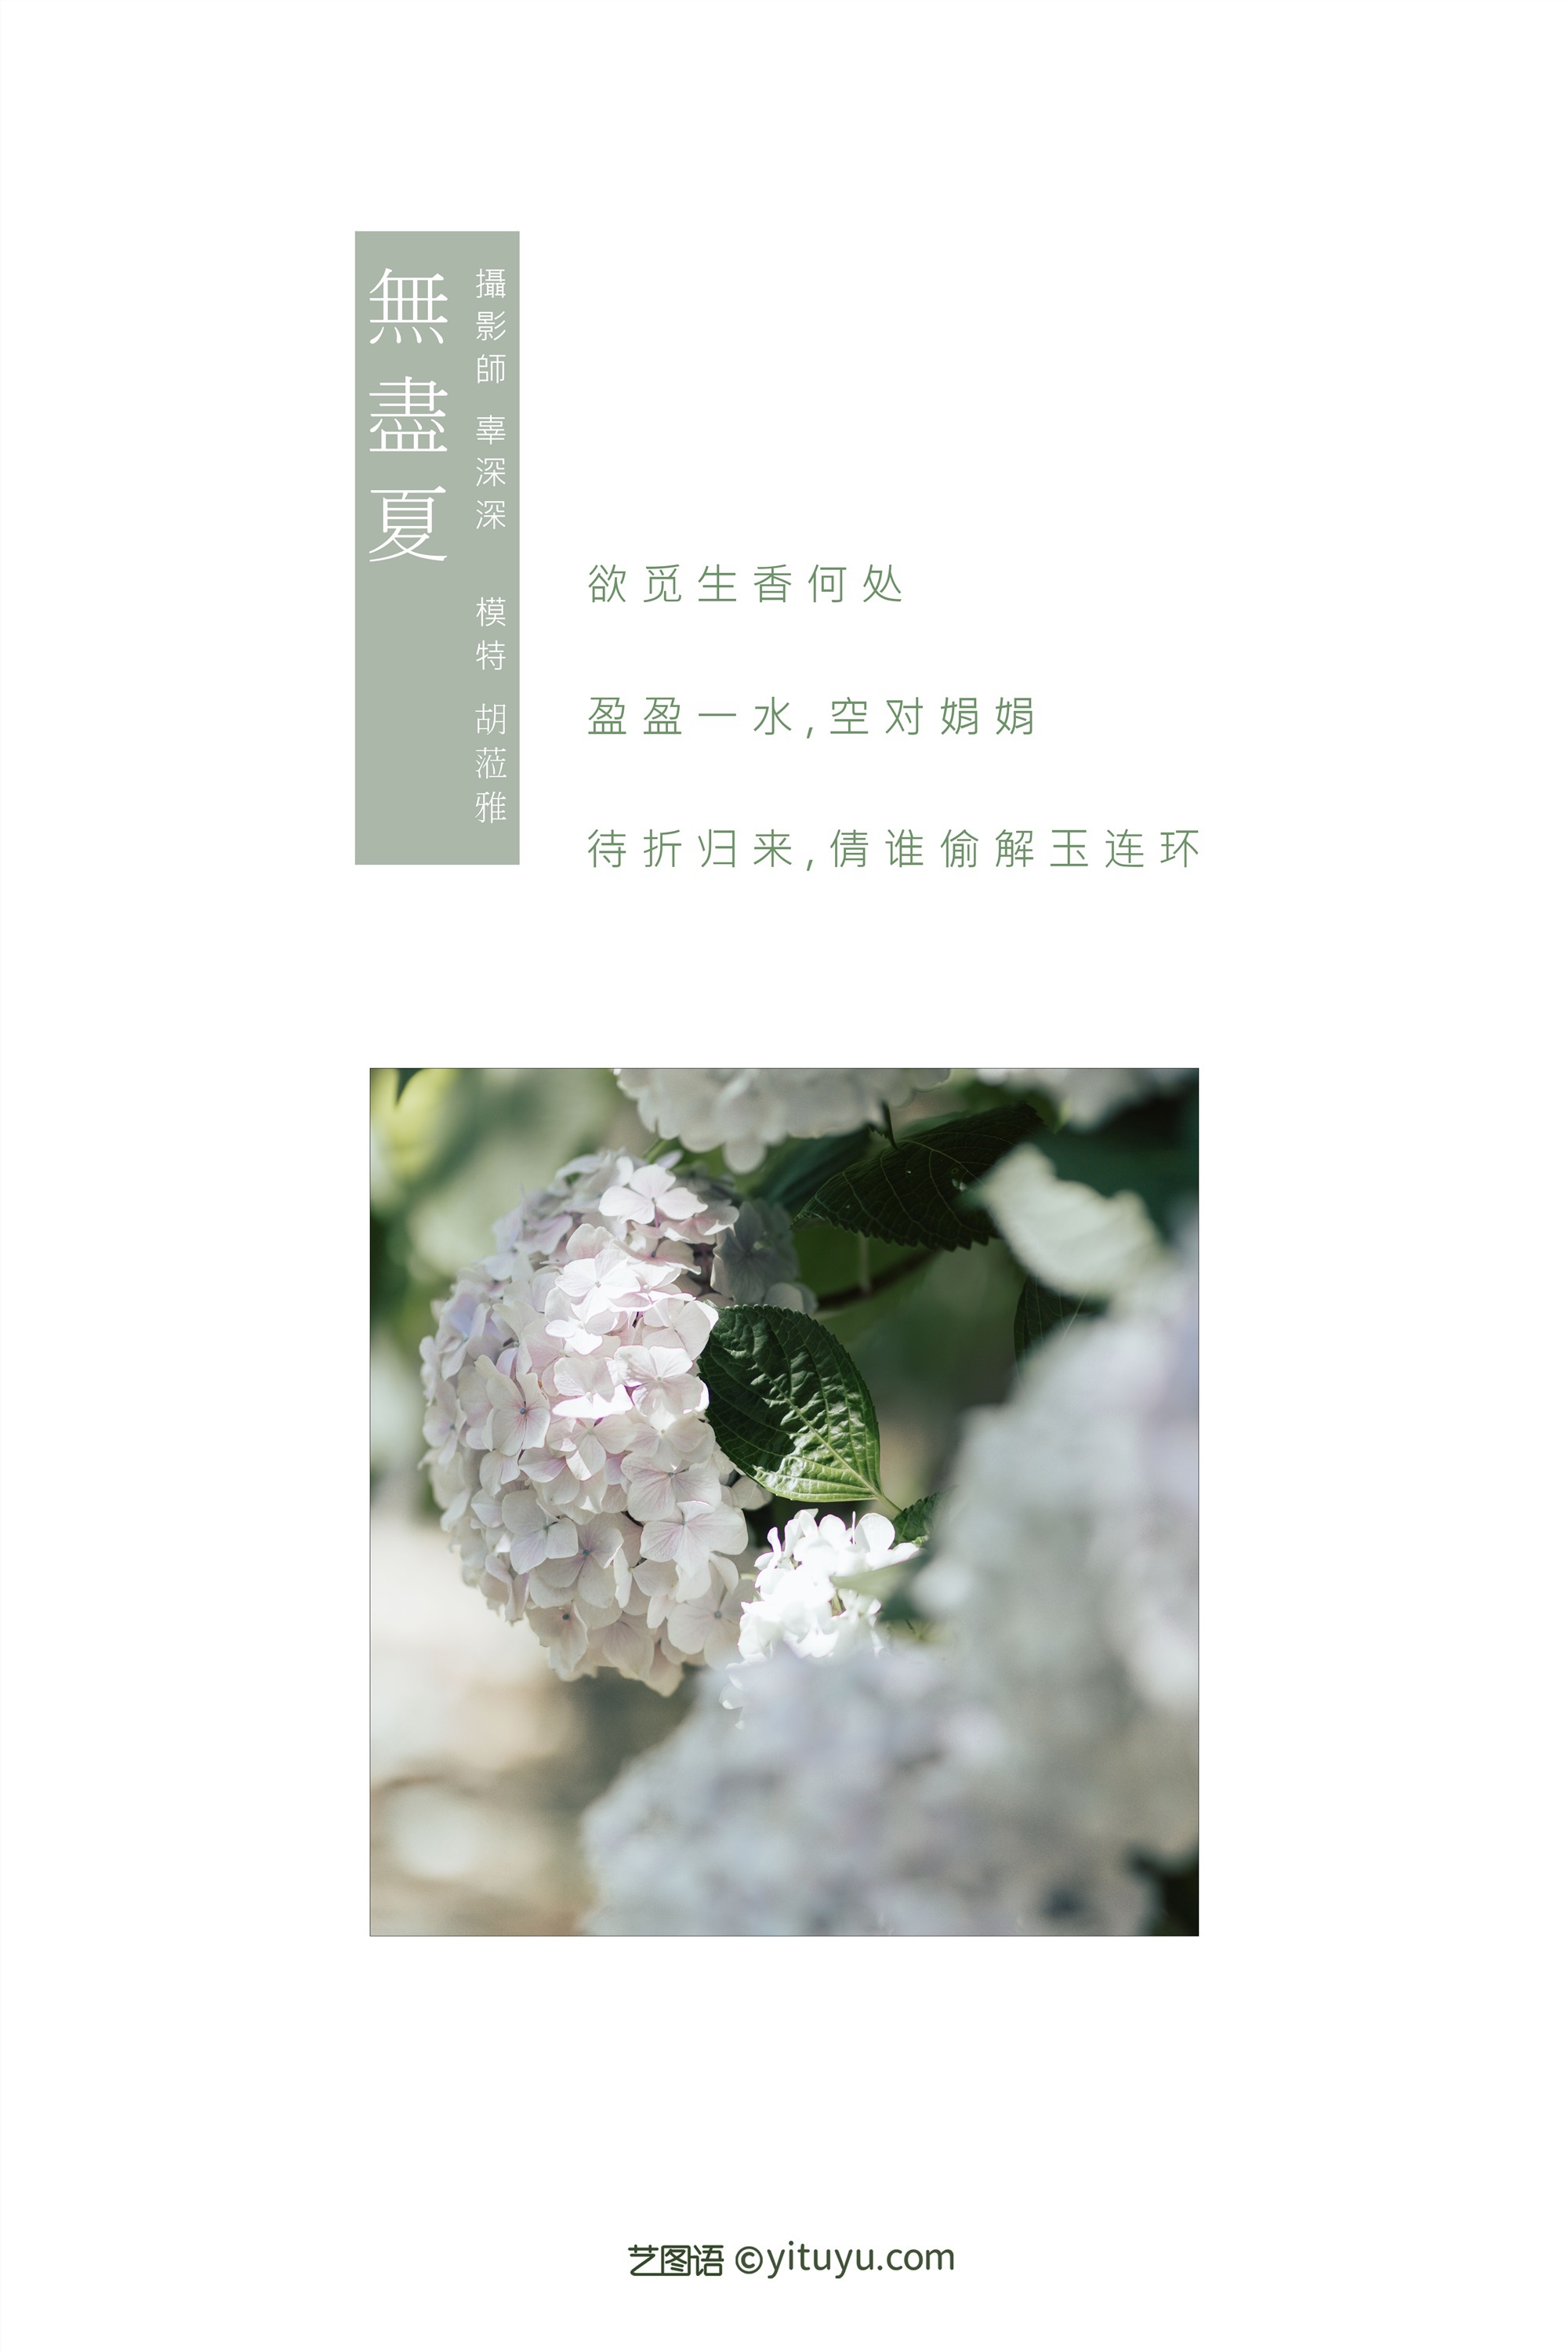 YITUYU Art Picture Language 2021.09.06 Endless Summer Hu Liya